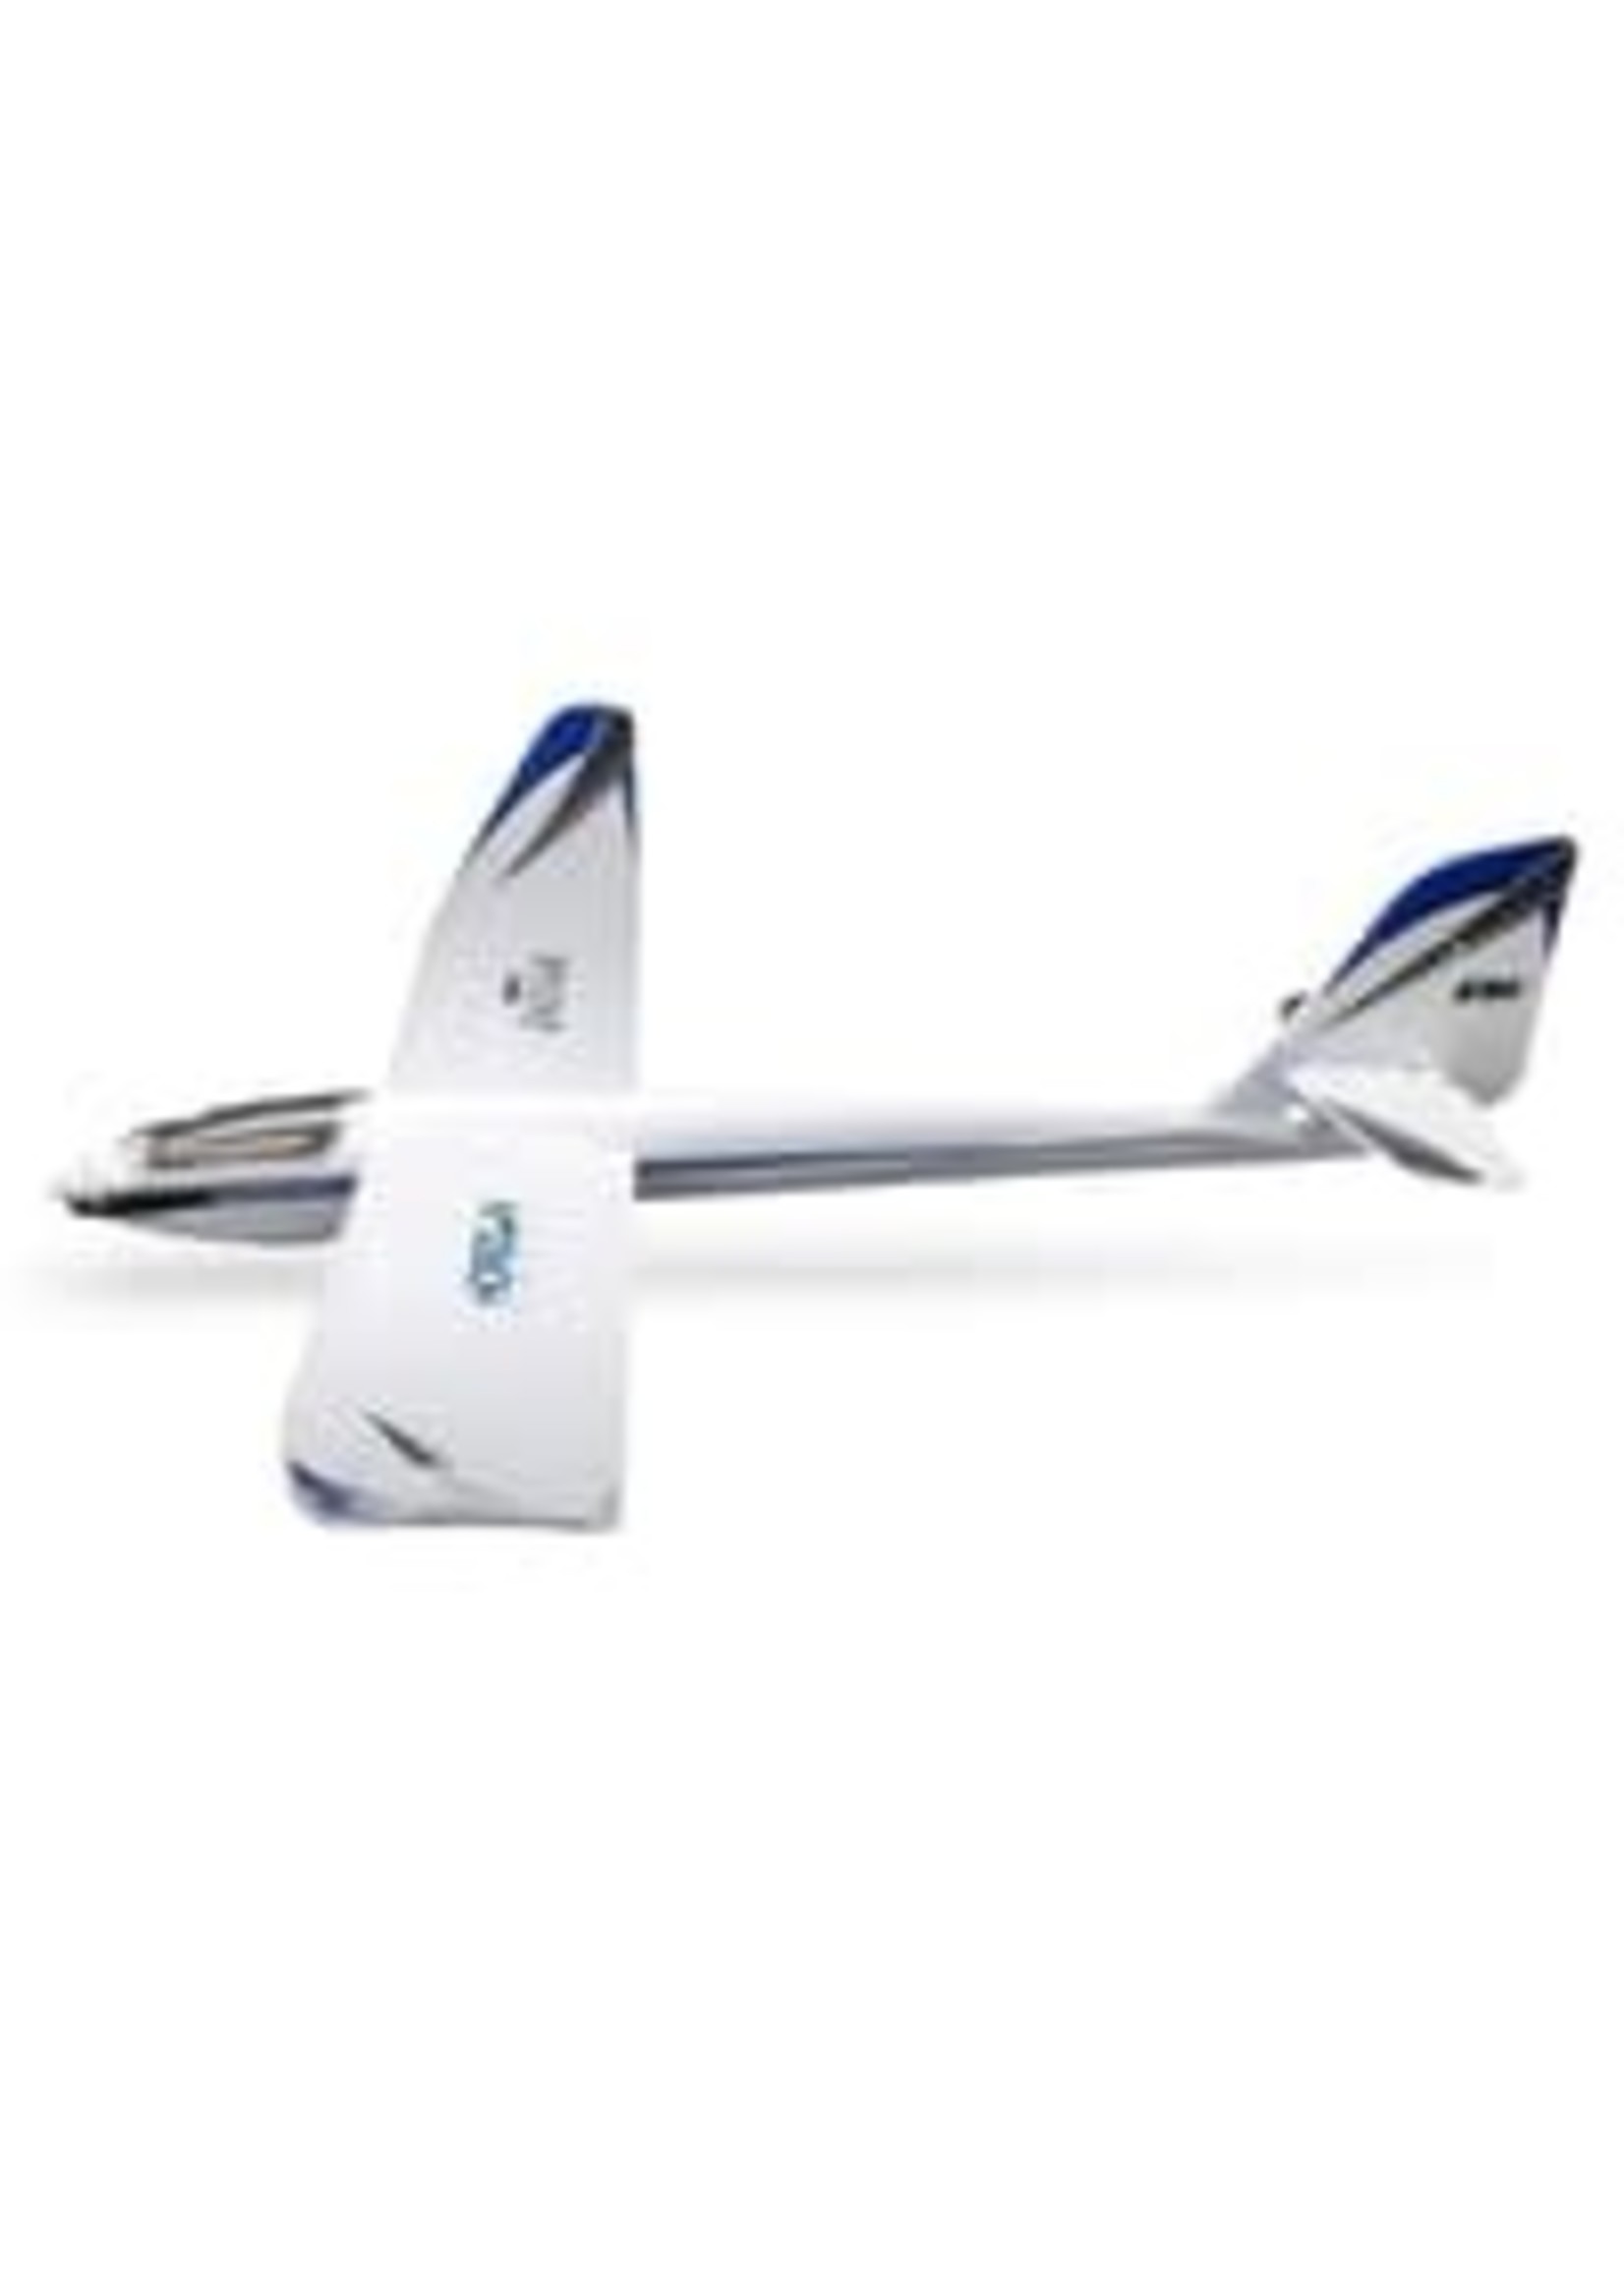 E-Flite EFL36500 E-flite Night Radian 2.0m Bind-N-Fly Basic Electric Glider Airplane (2000mm) w/AS3X & SAFE Select